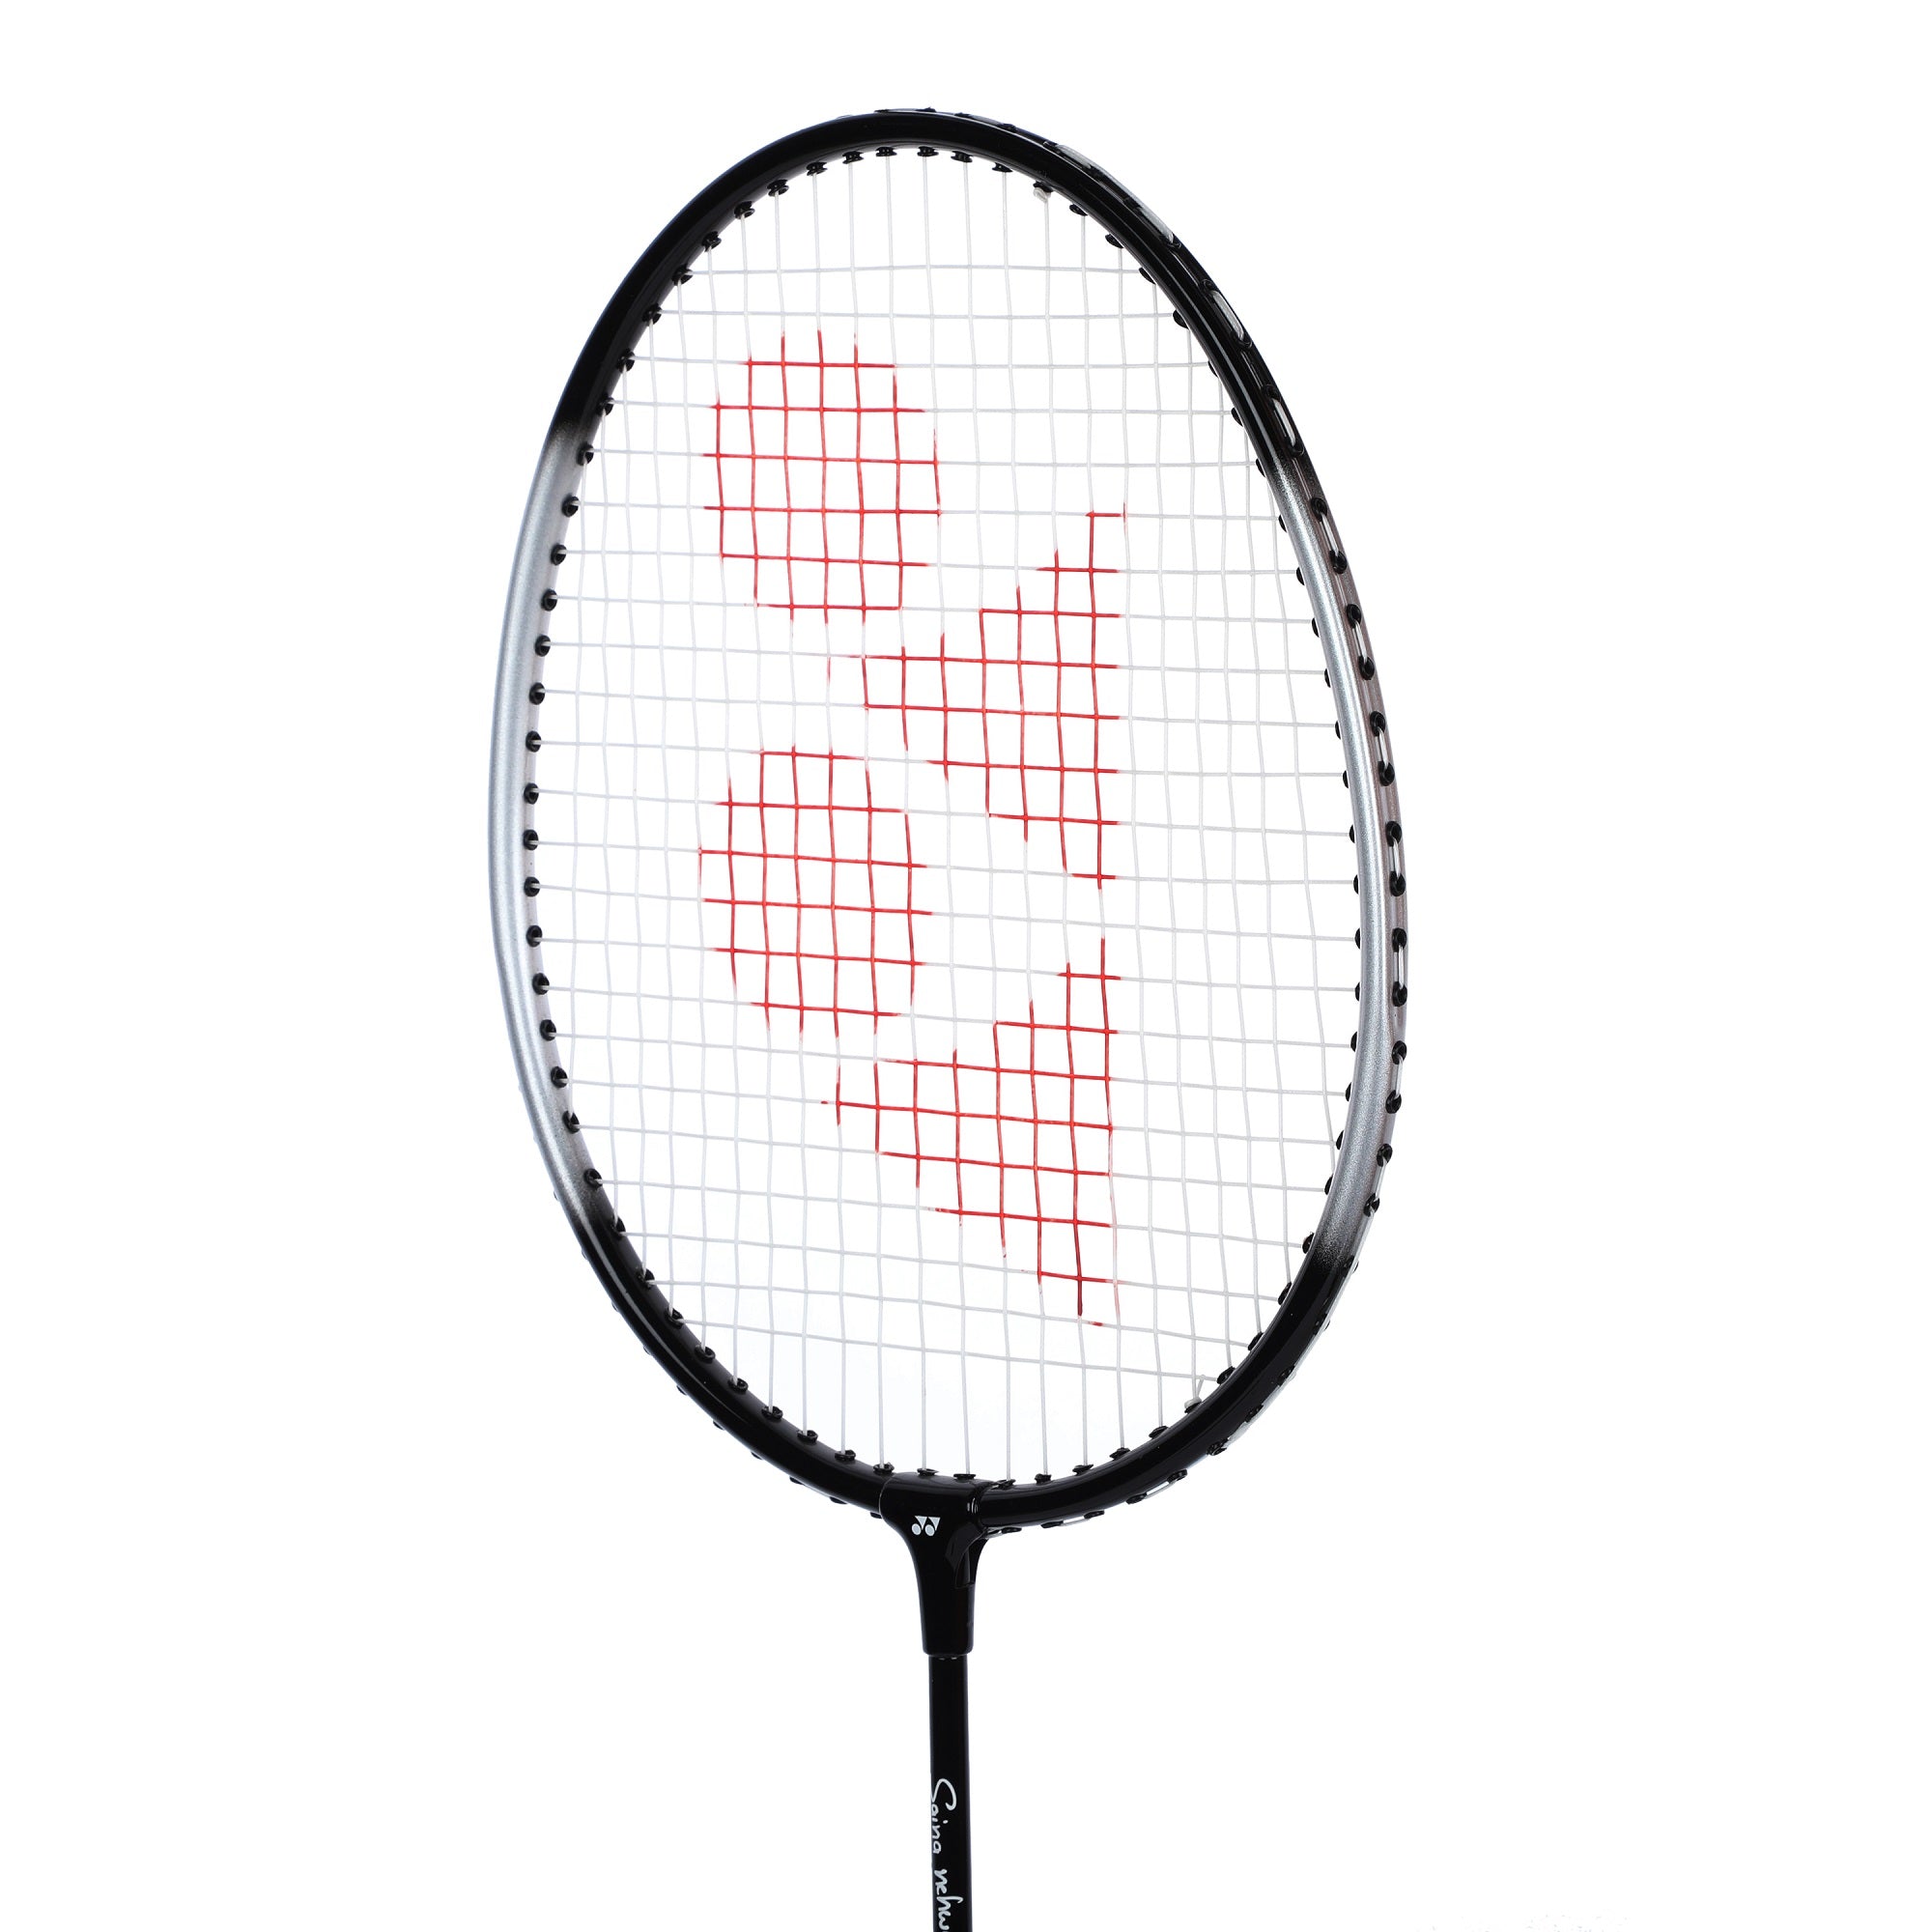 Yonex GR 303 Saina Nehwal Edition Combo Of 2 Rackets Badminton Racket